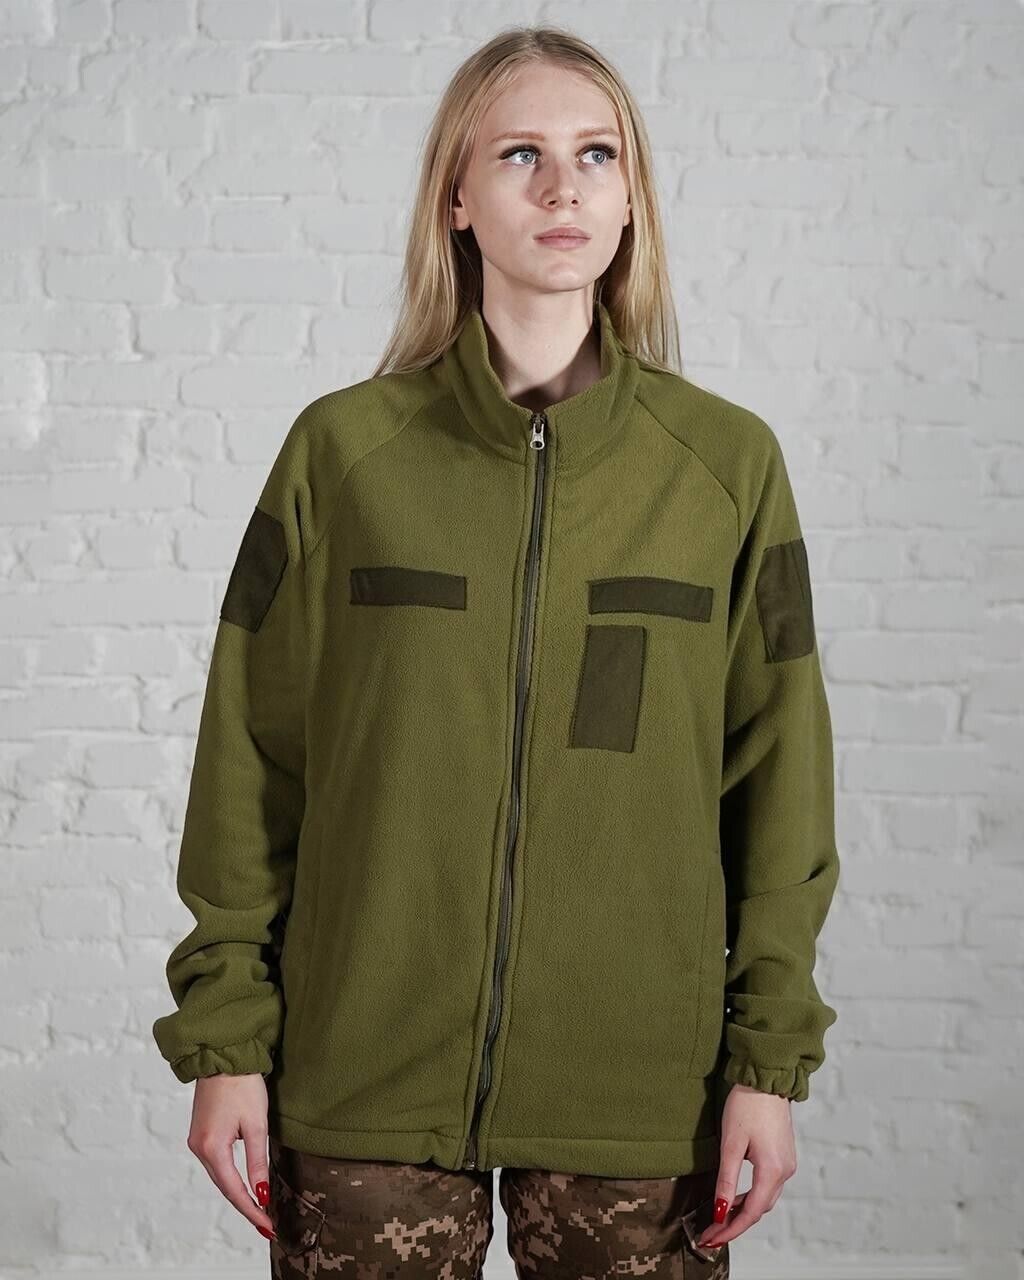 Women\'s fleece jacket olive army military fleece assault warm comfortable